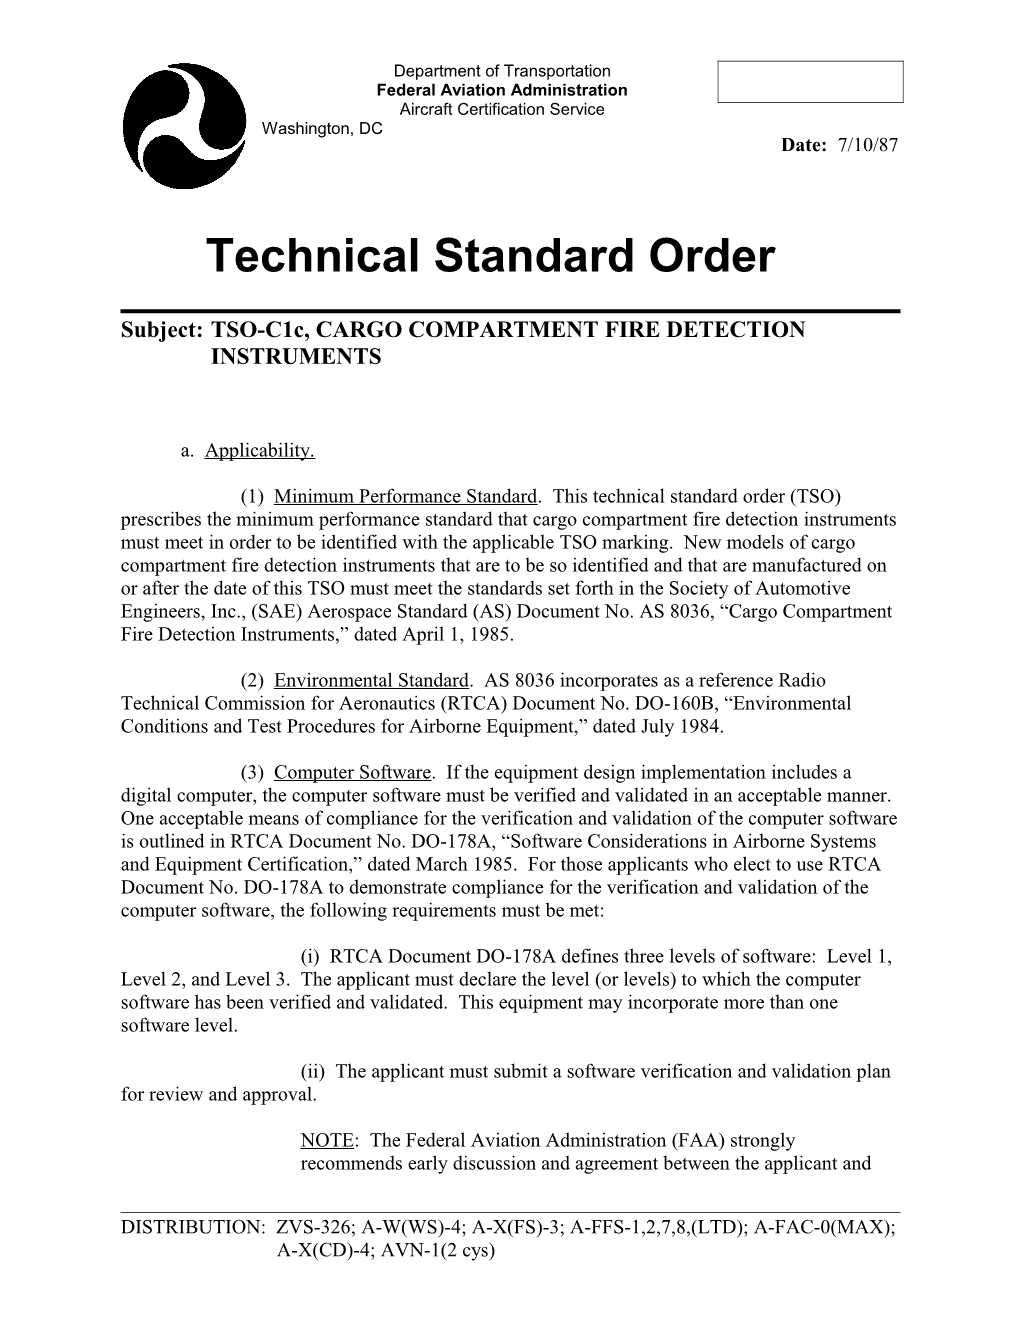 (1) Minimum Performance Standard. This Technical Standard Order (TSO) Prescribes the Minimum